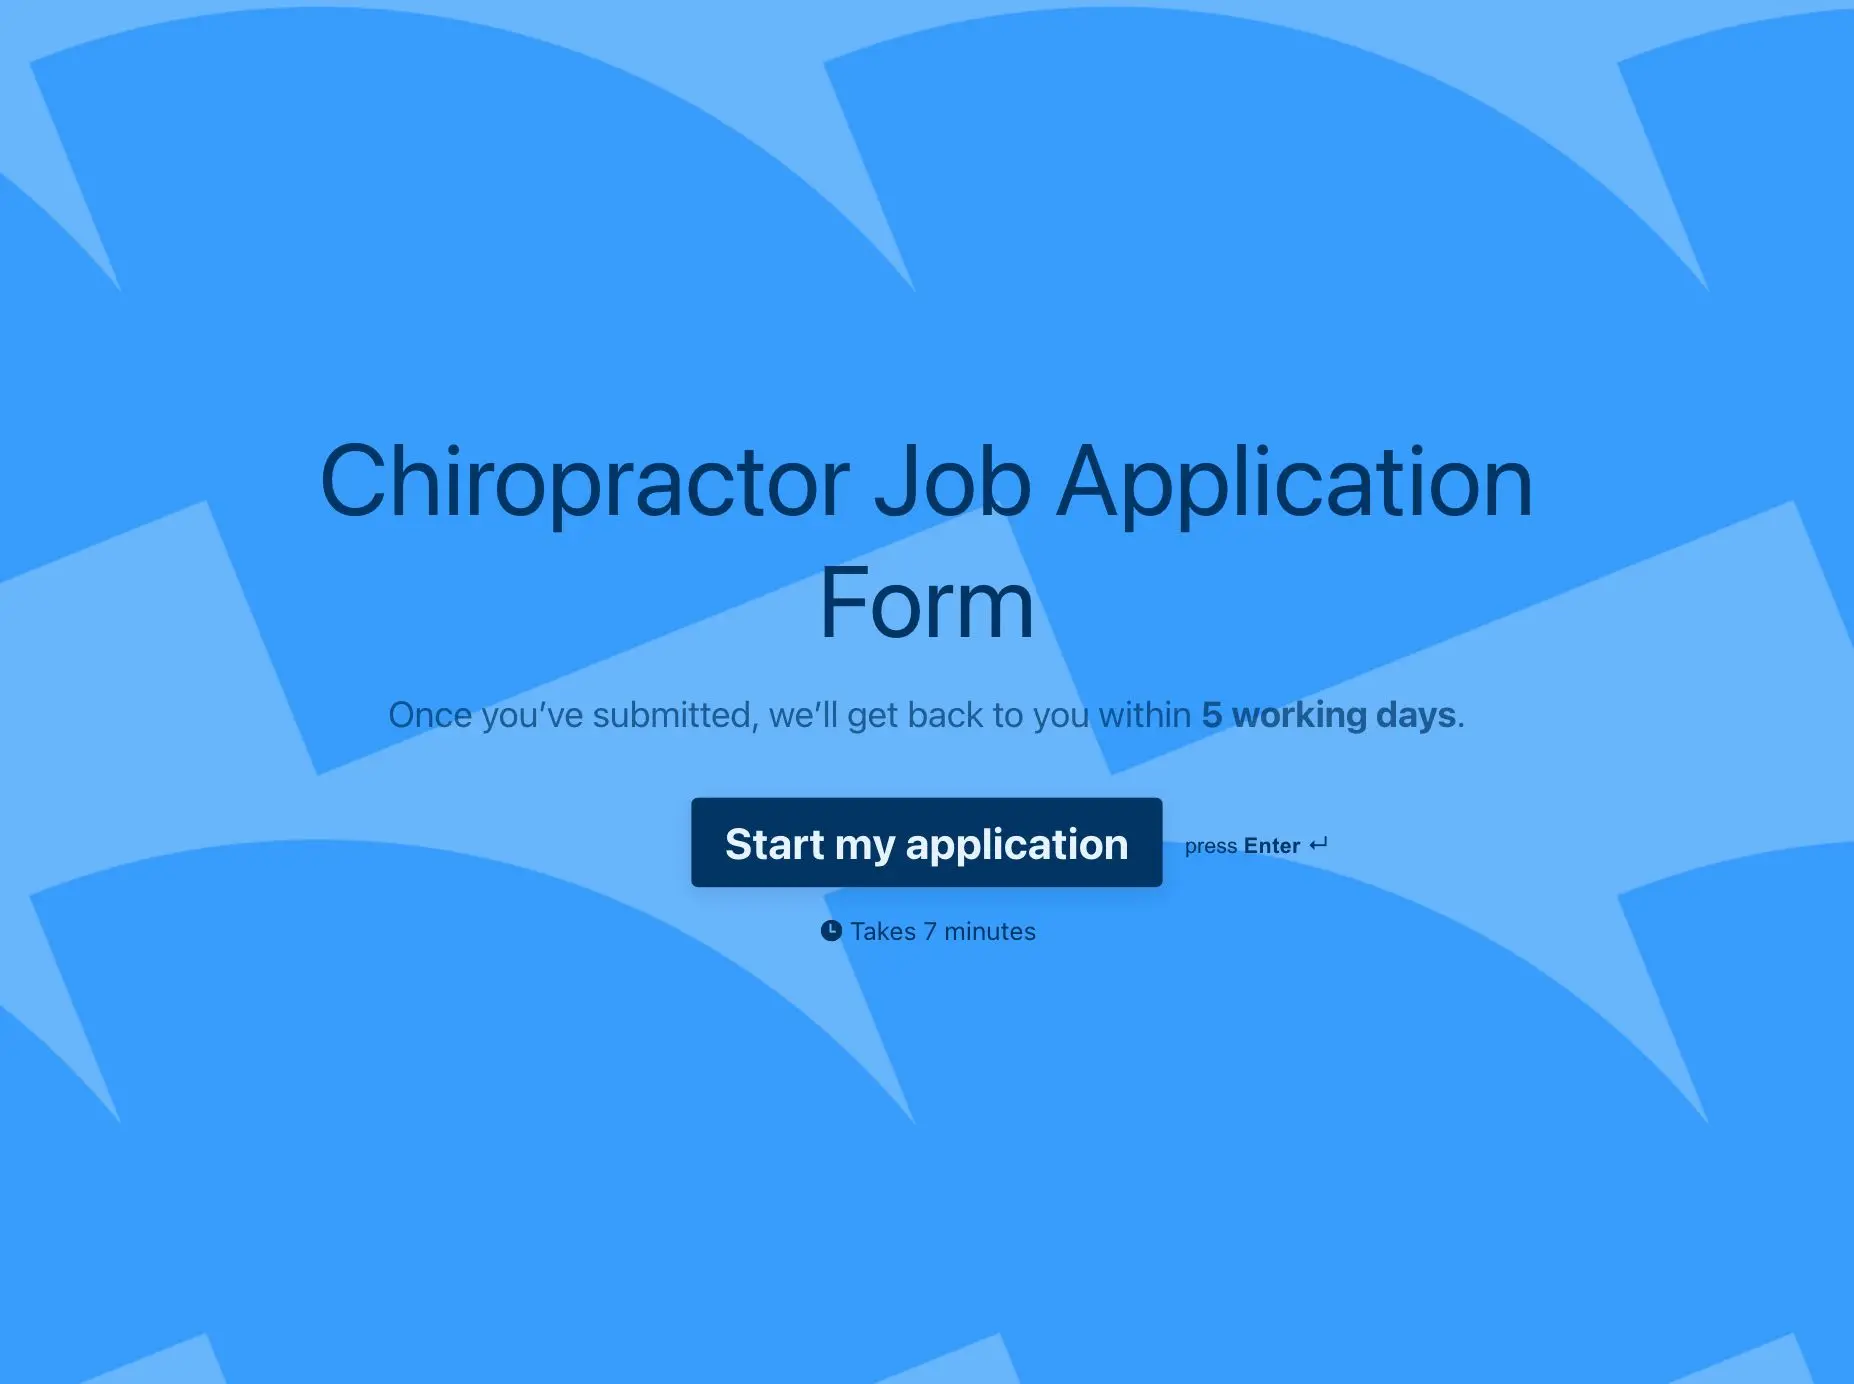 Chiropractor Job Application Form Template Hero